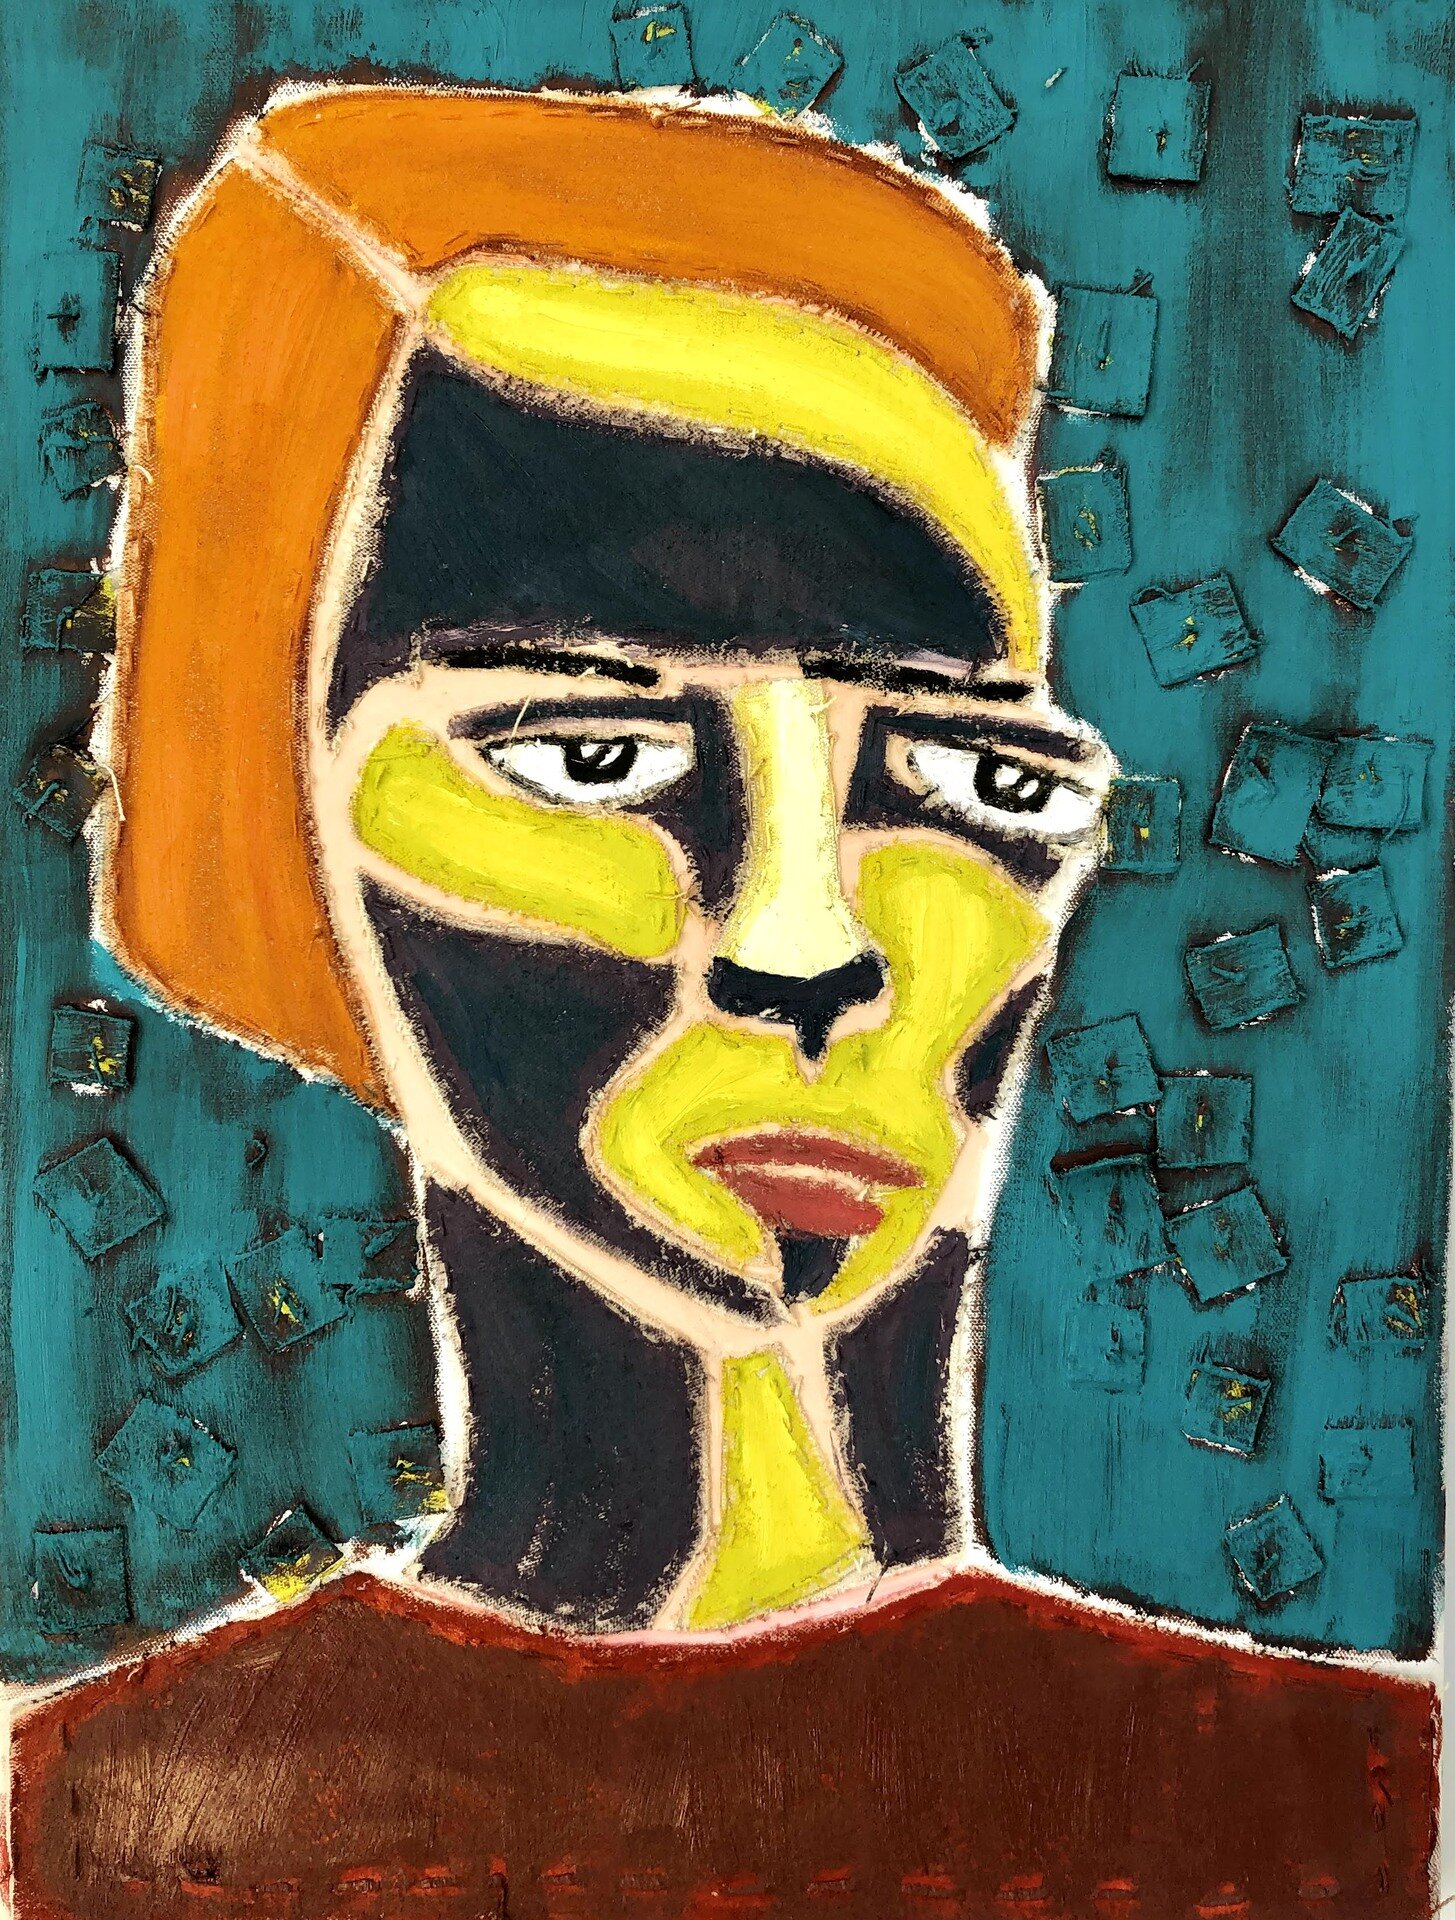   Susan Miller Zelenak  “Fragmented Face with Orange Hair” 24" x 18" x 1"; Oil, canvas, waxed thread  $1000. 